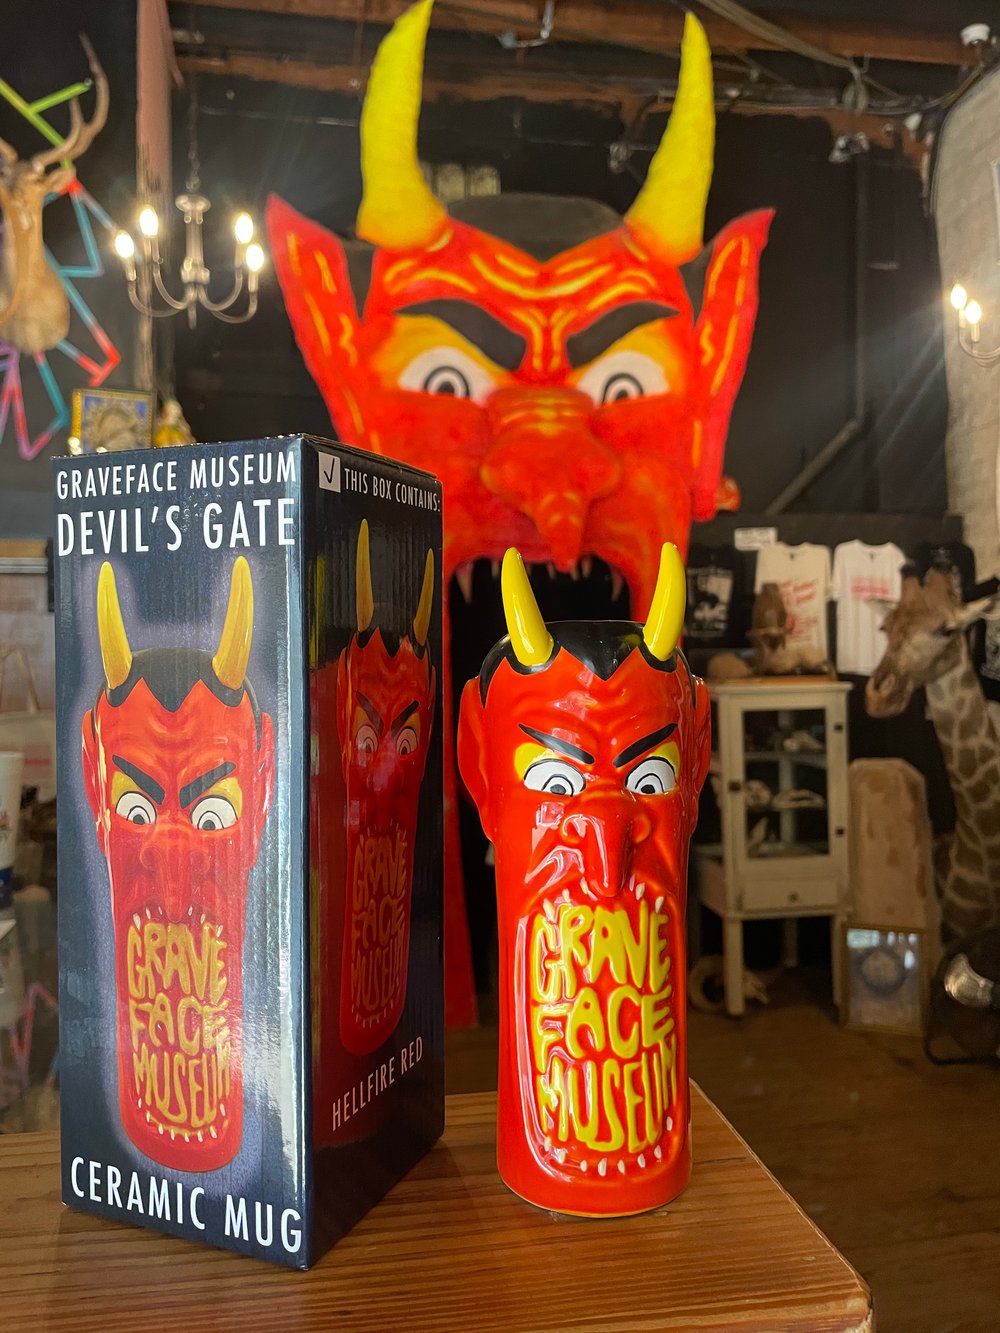 Graveface Museum DEVIL'S GATE 12oz Mug - Hellfire Red Edition